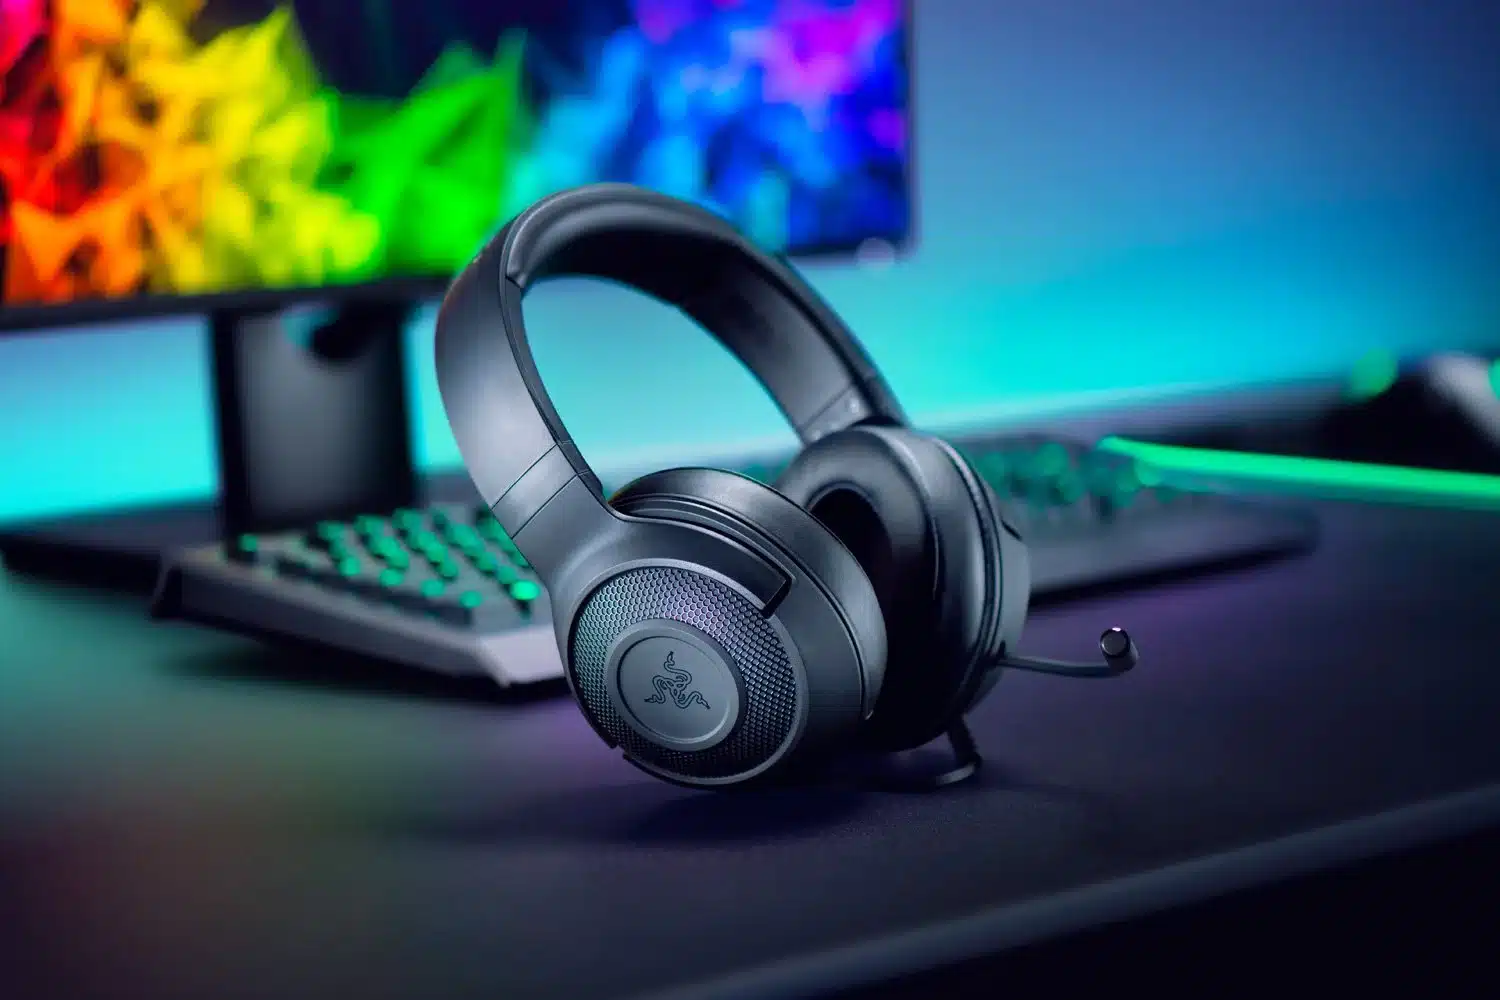 Best Gaming Headsets: Razer Kraken X